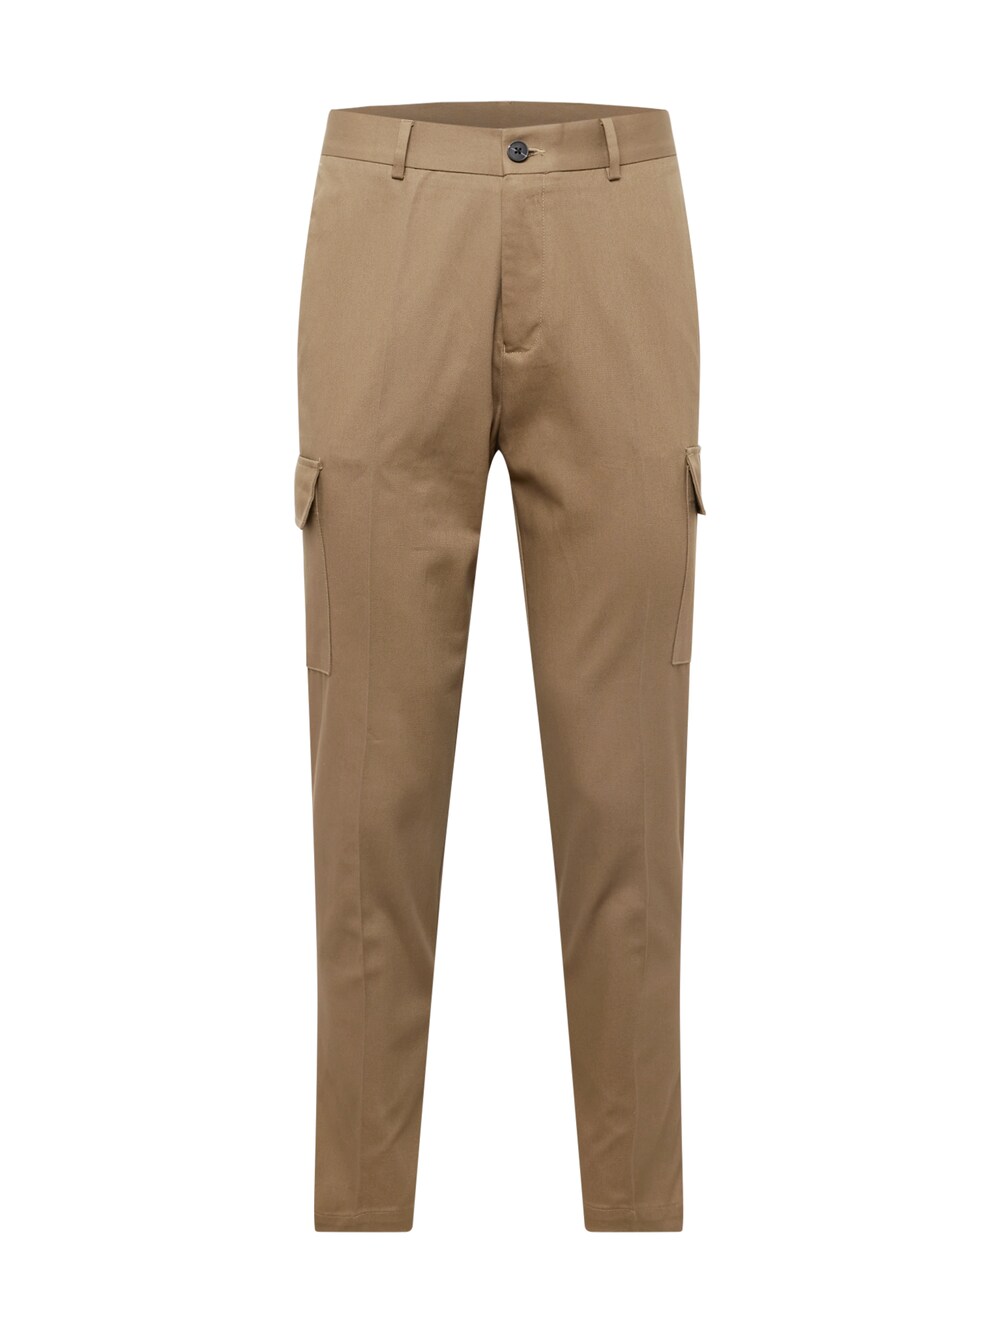 Узкие брюки-карго BURTON MENSWEAR LONDON, светло-коричневый